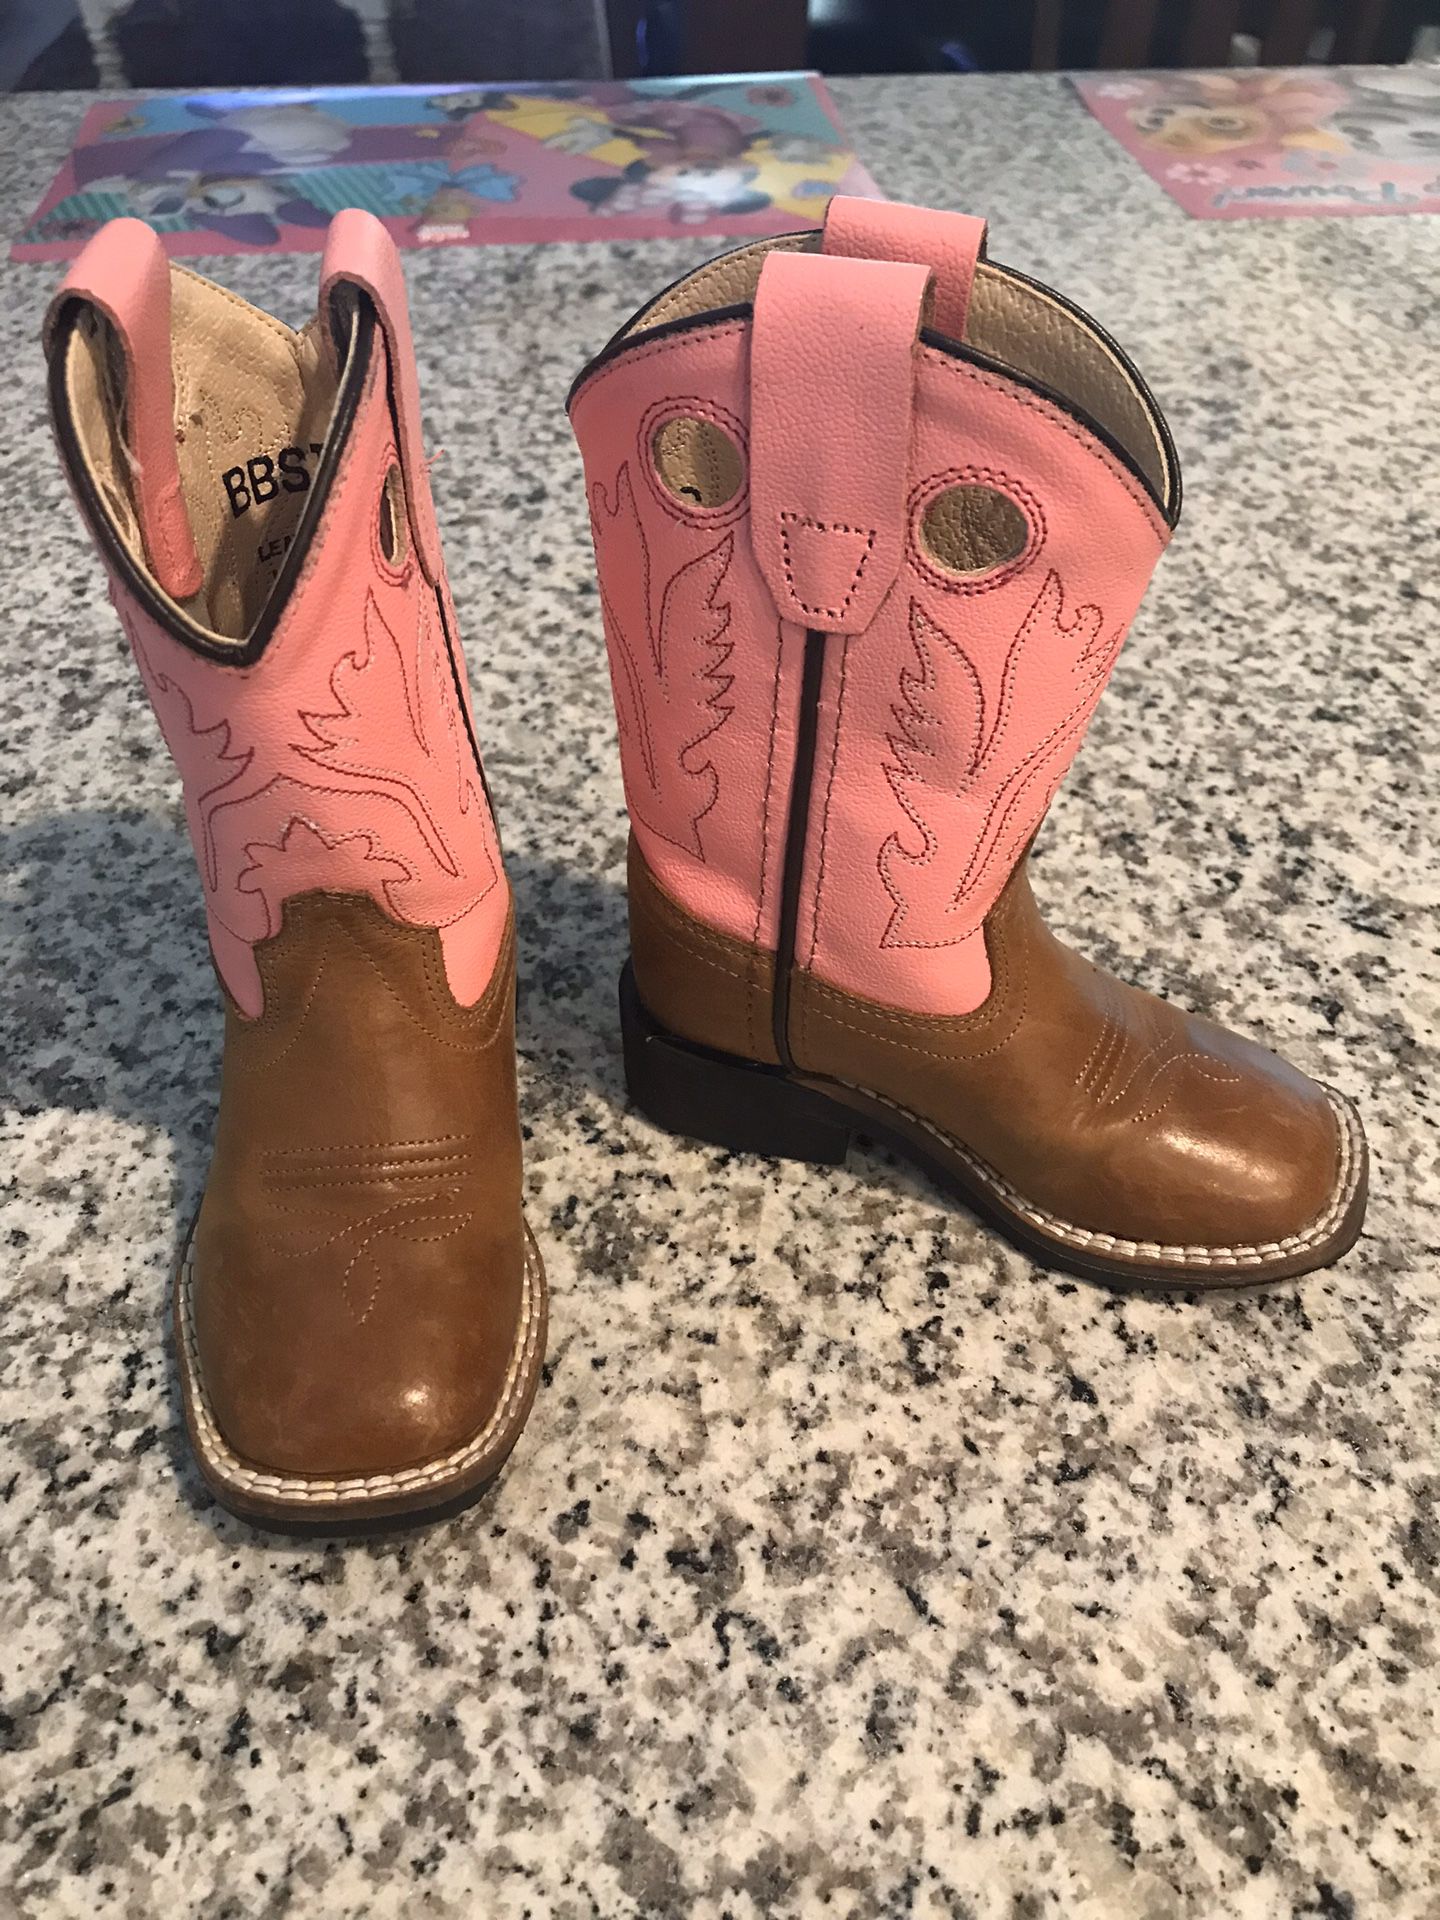 Girls toddler boots